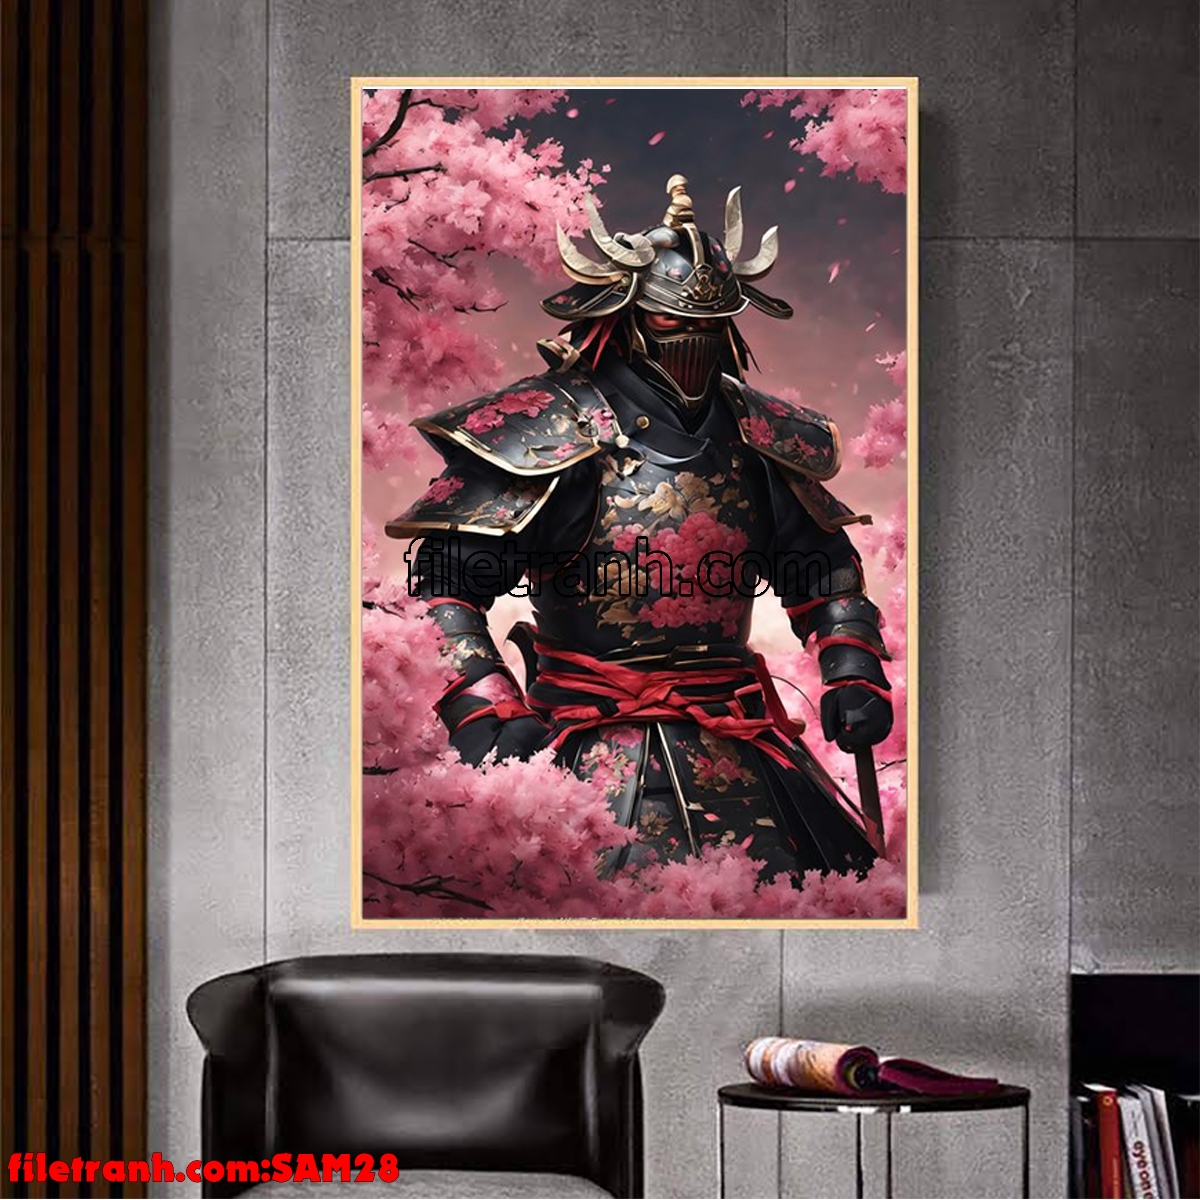 https://filetranh.com/samurai/file-tranh-samurai-vo-si-nhat-ban-sam28.html